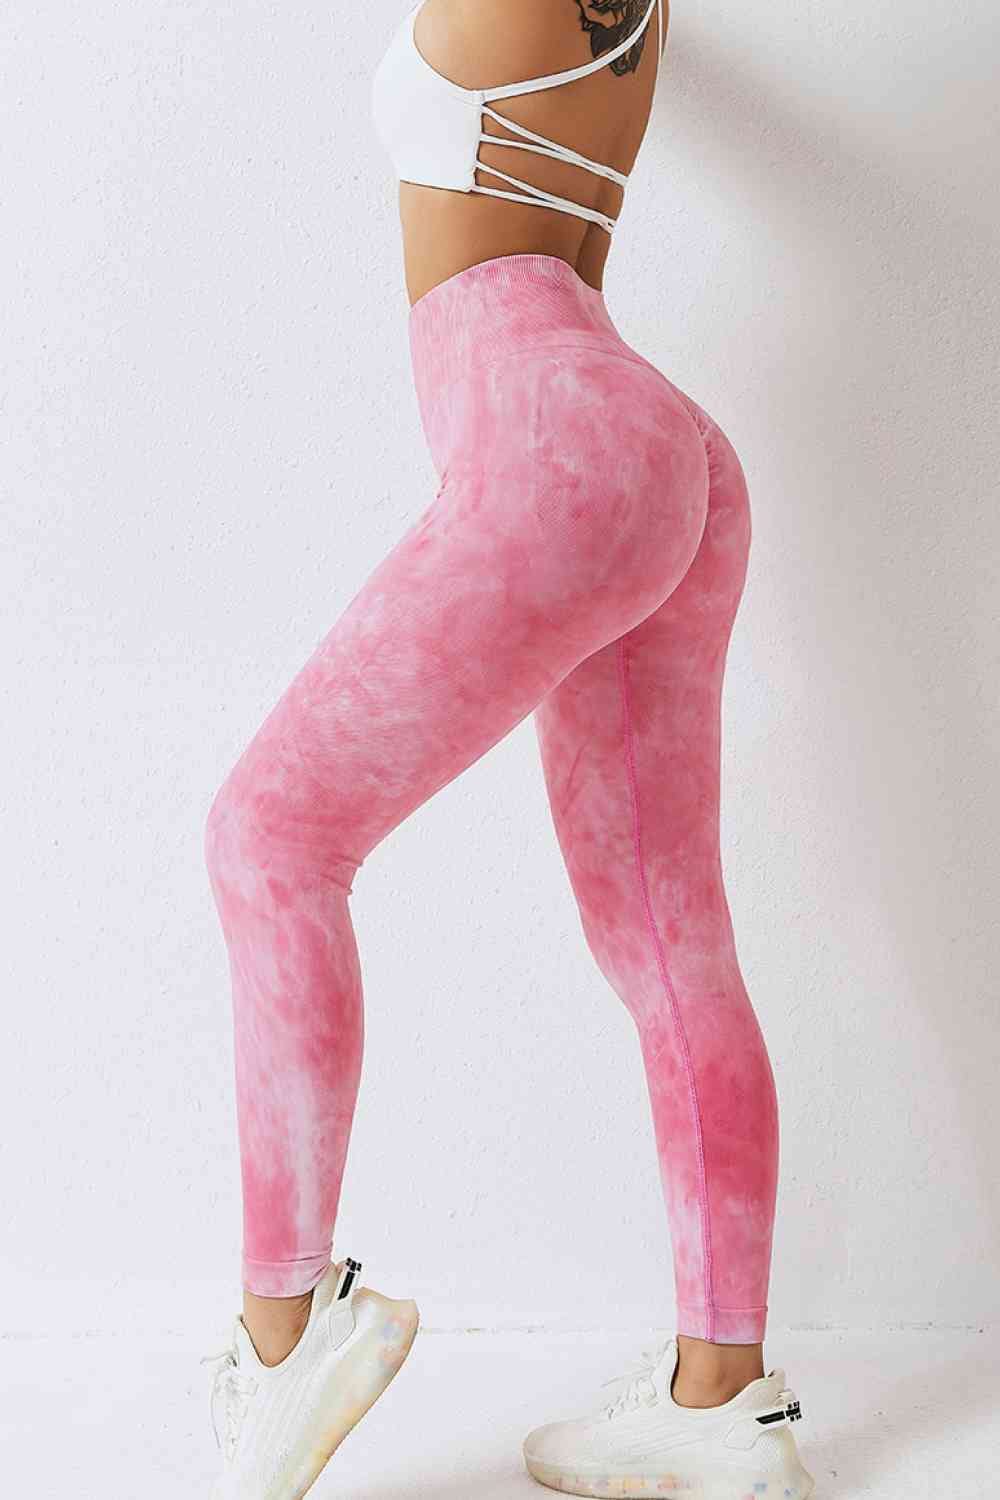 Trendsi leggins Blush Pink / S High Waist Tie-Dye Long Sports Pants